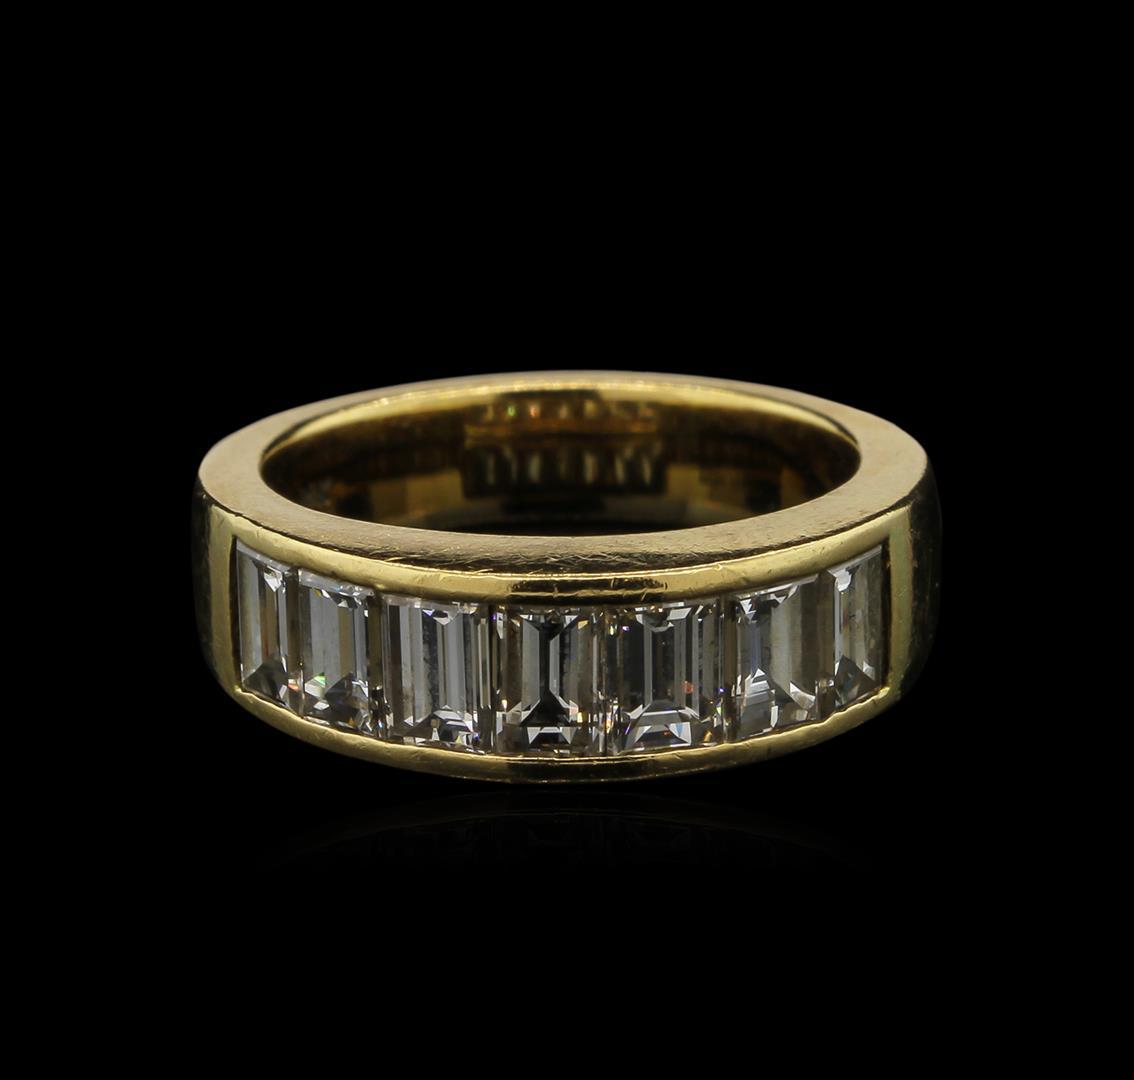 1.68 ctw Diamond Ring - 18KT Yellow Gold